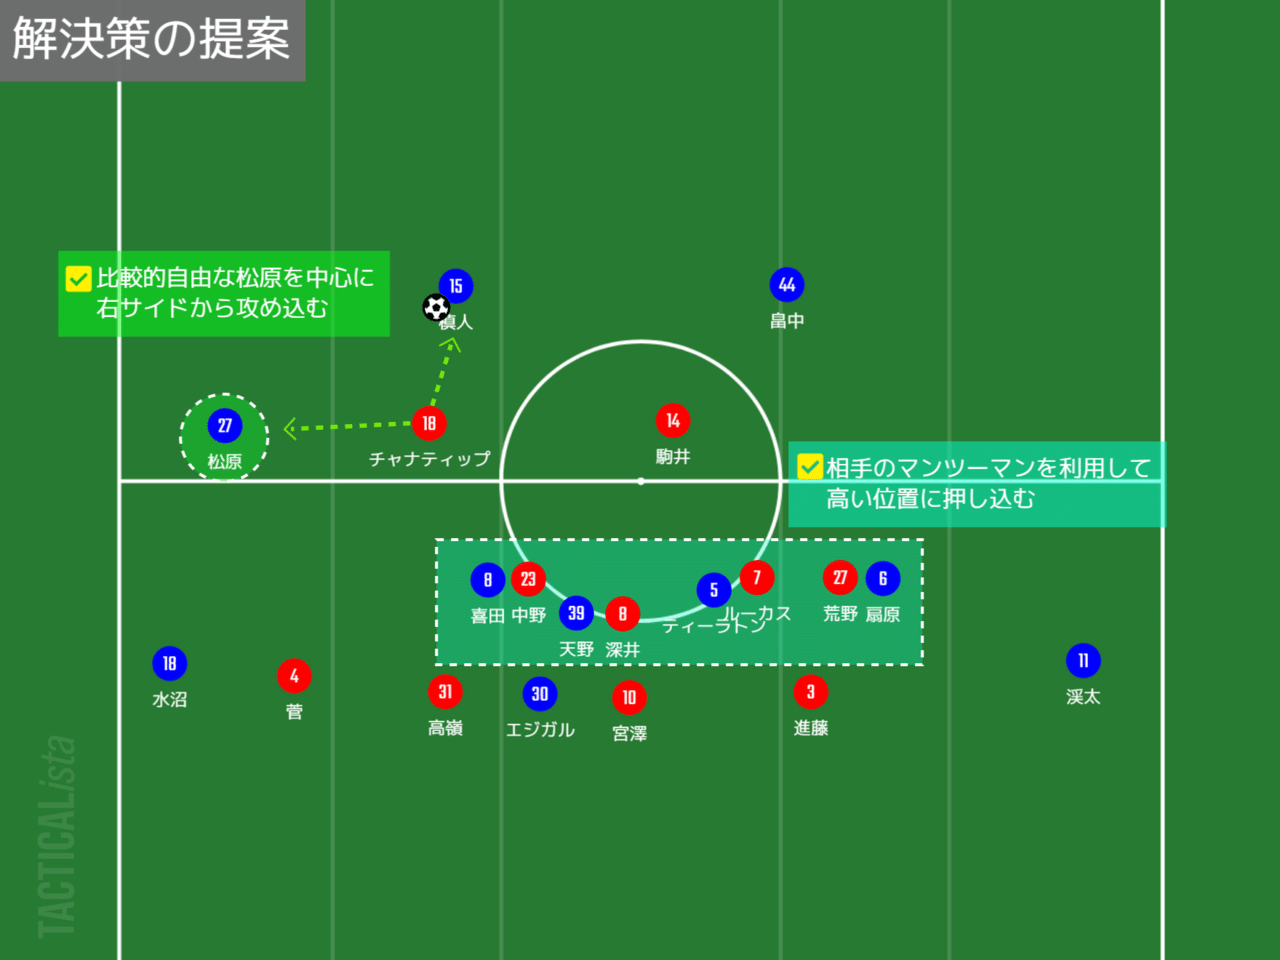 J1 第7節 コンサドーレ札幌vs横浜f マリノス ゆるれびゅ ヒロ Note